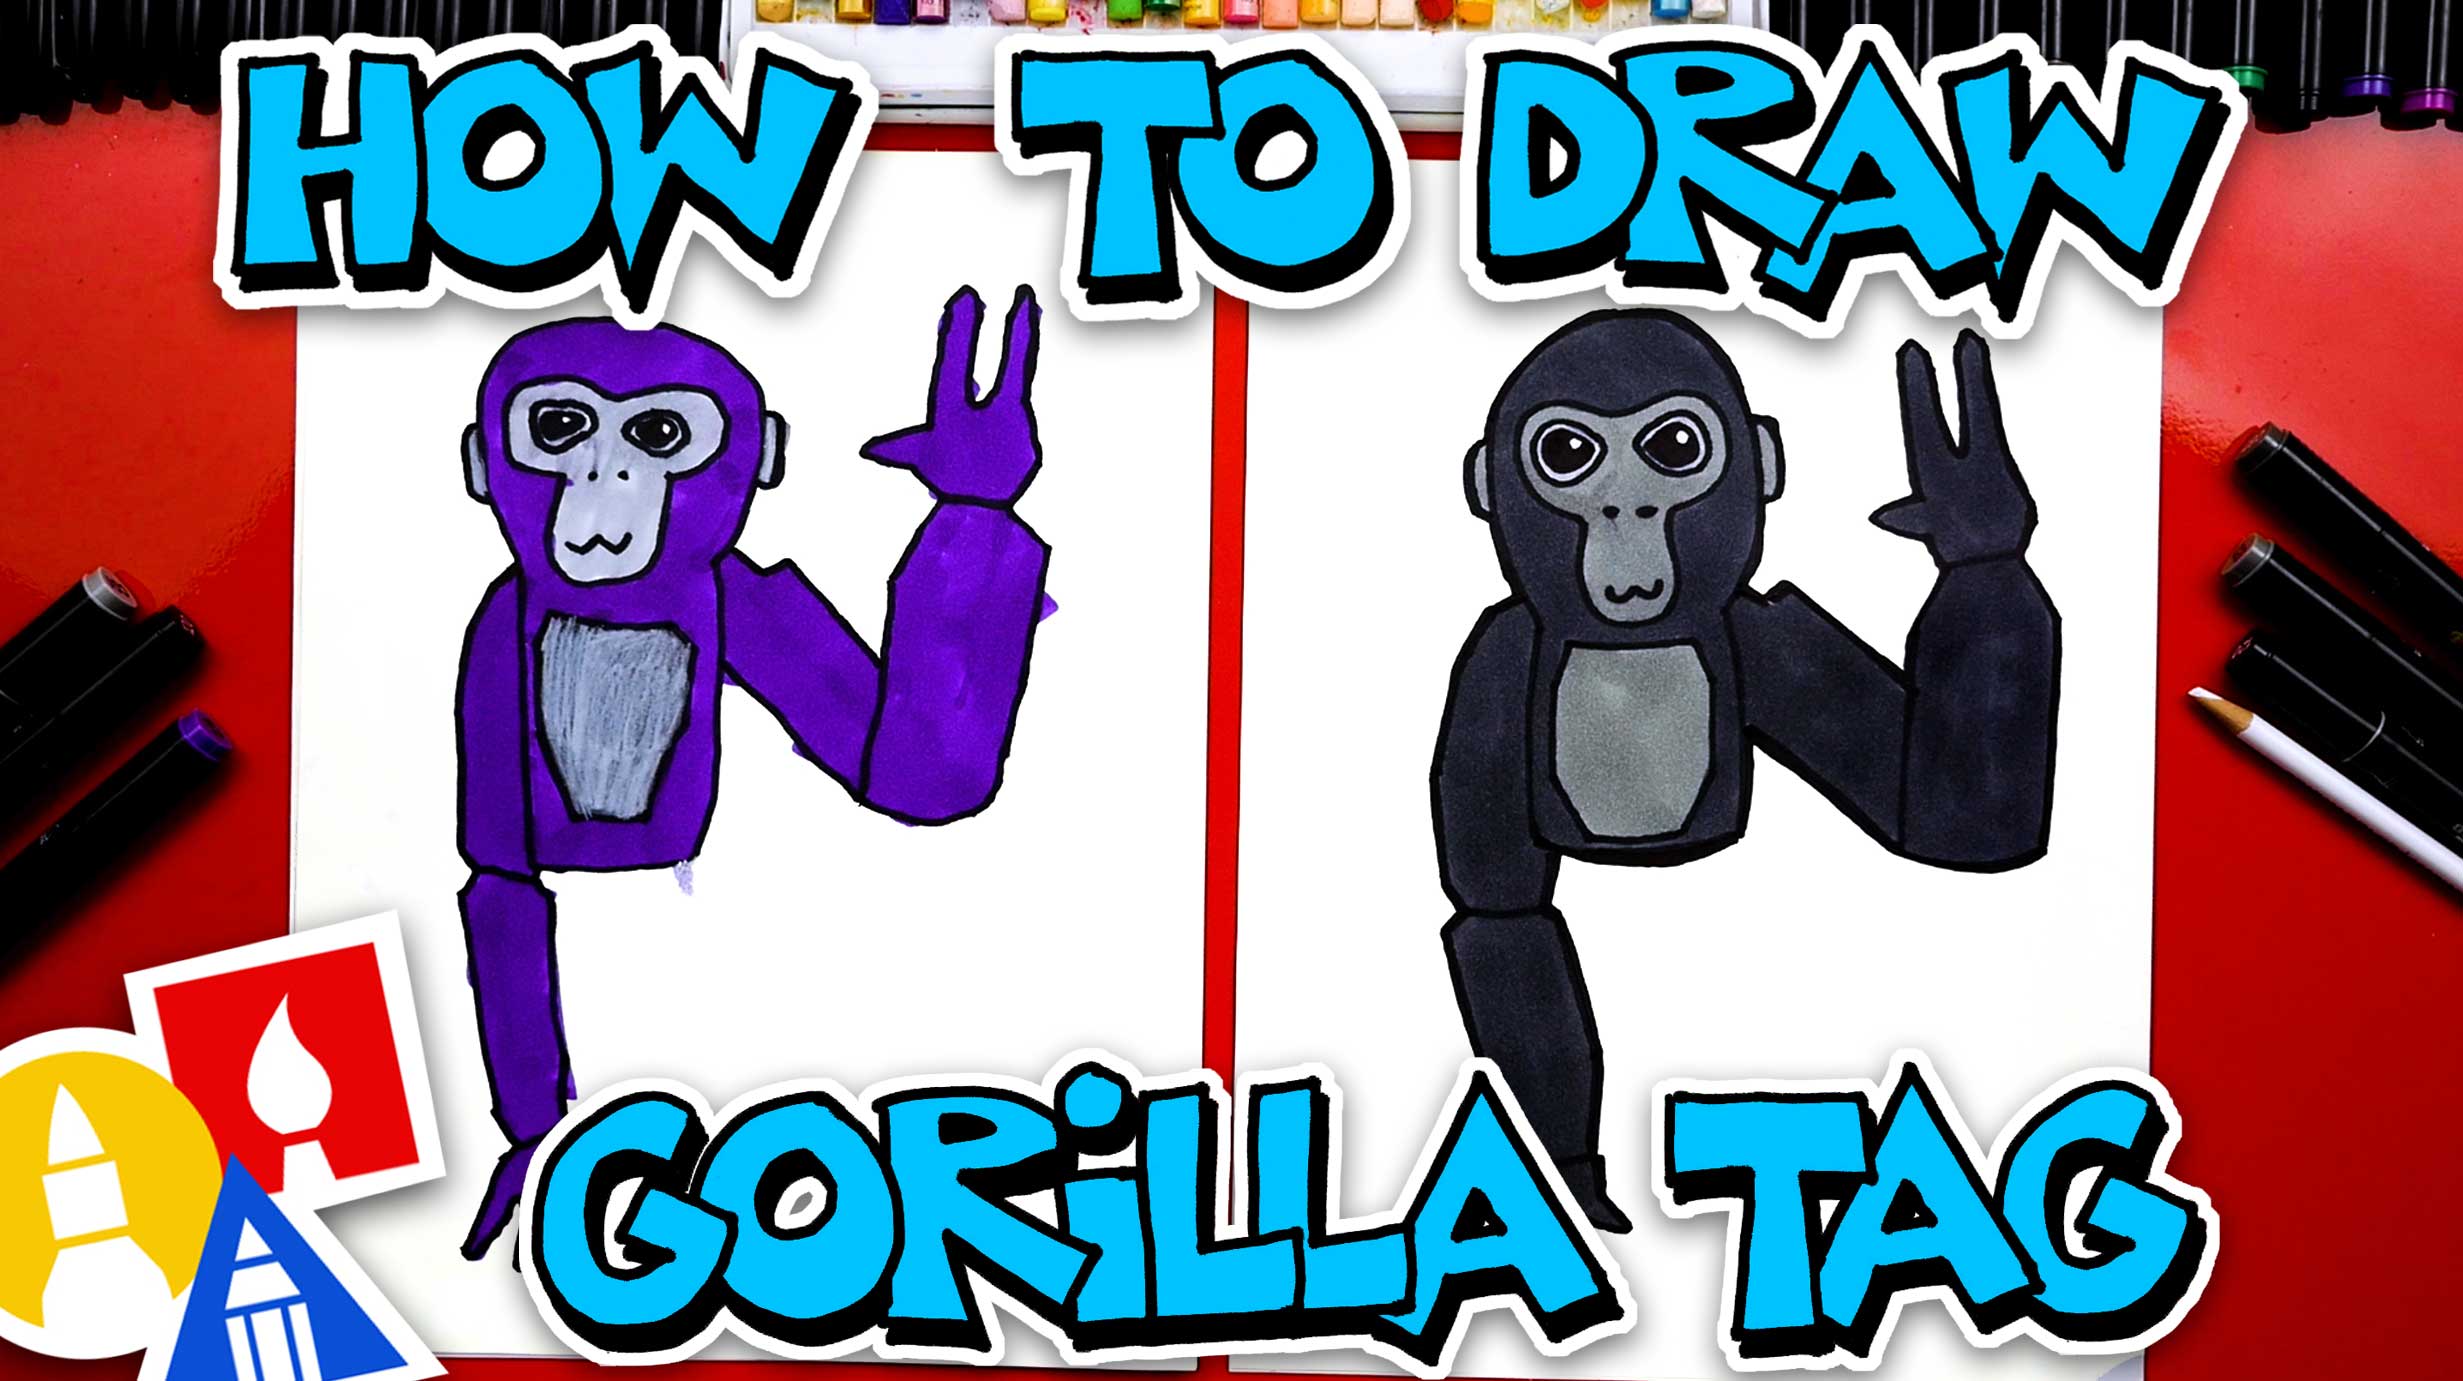 Gorilla drawing book# gorilla drawing book for kids/children colors  filling: Gorilla drawing book: Abbas, Mr Sajeel: 9798806339127: Amazon.com:  Books